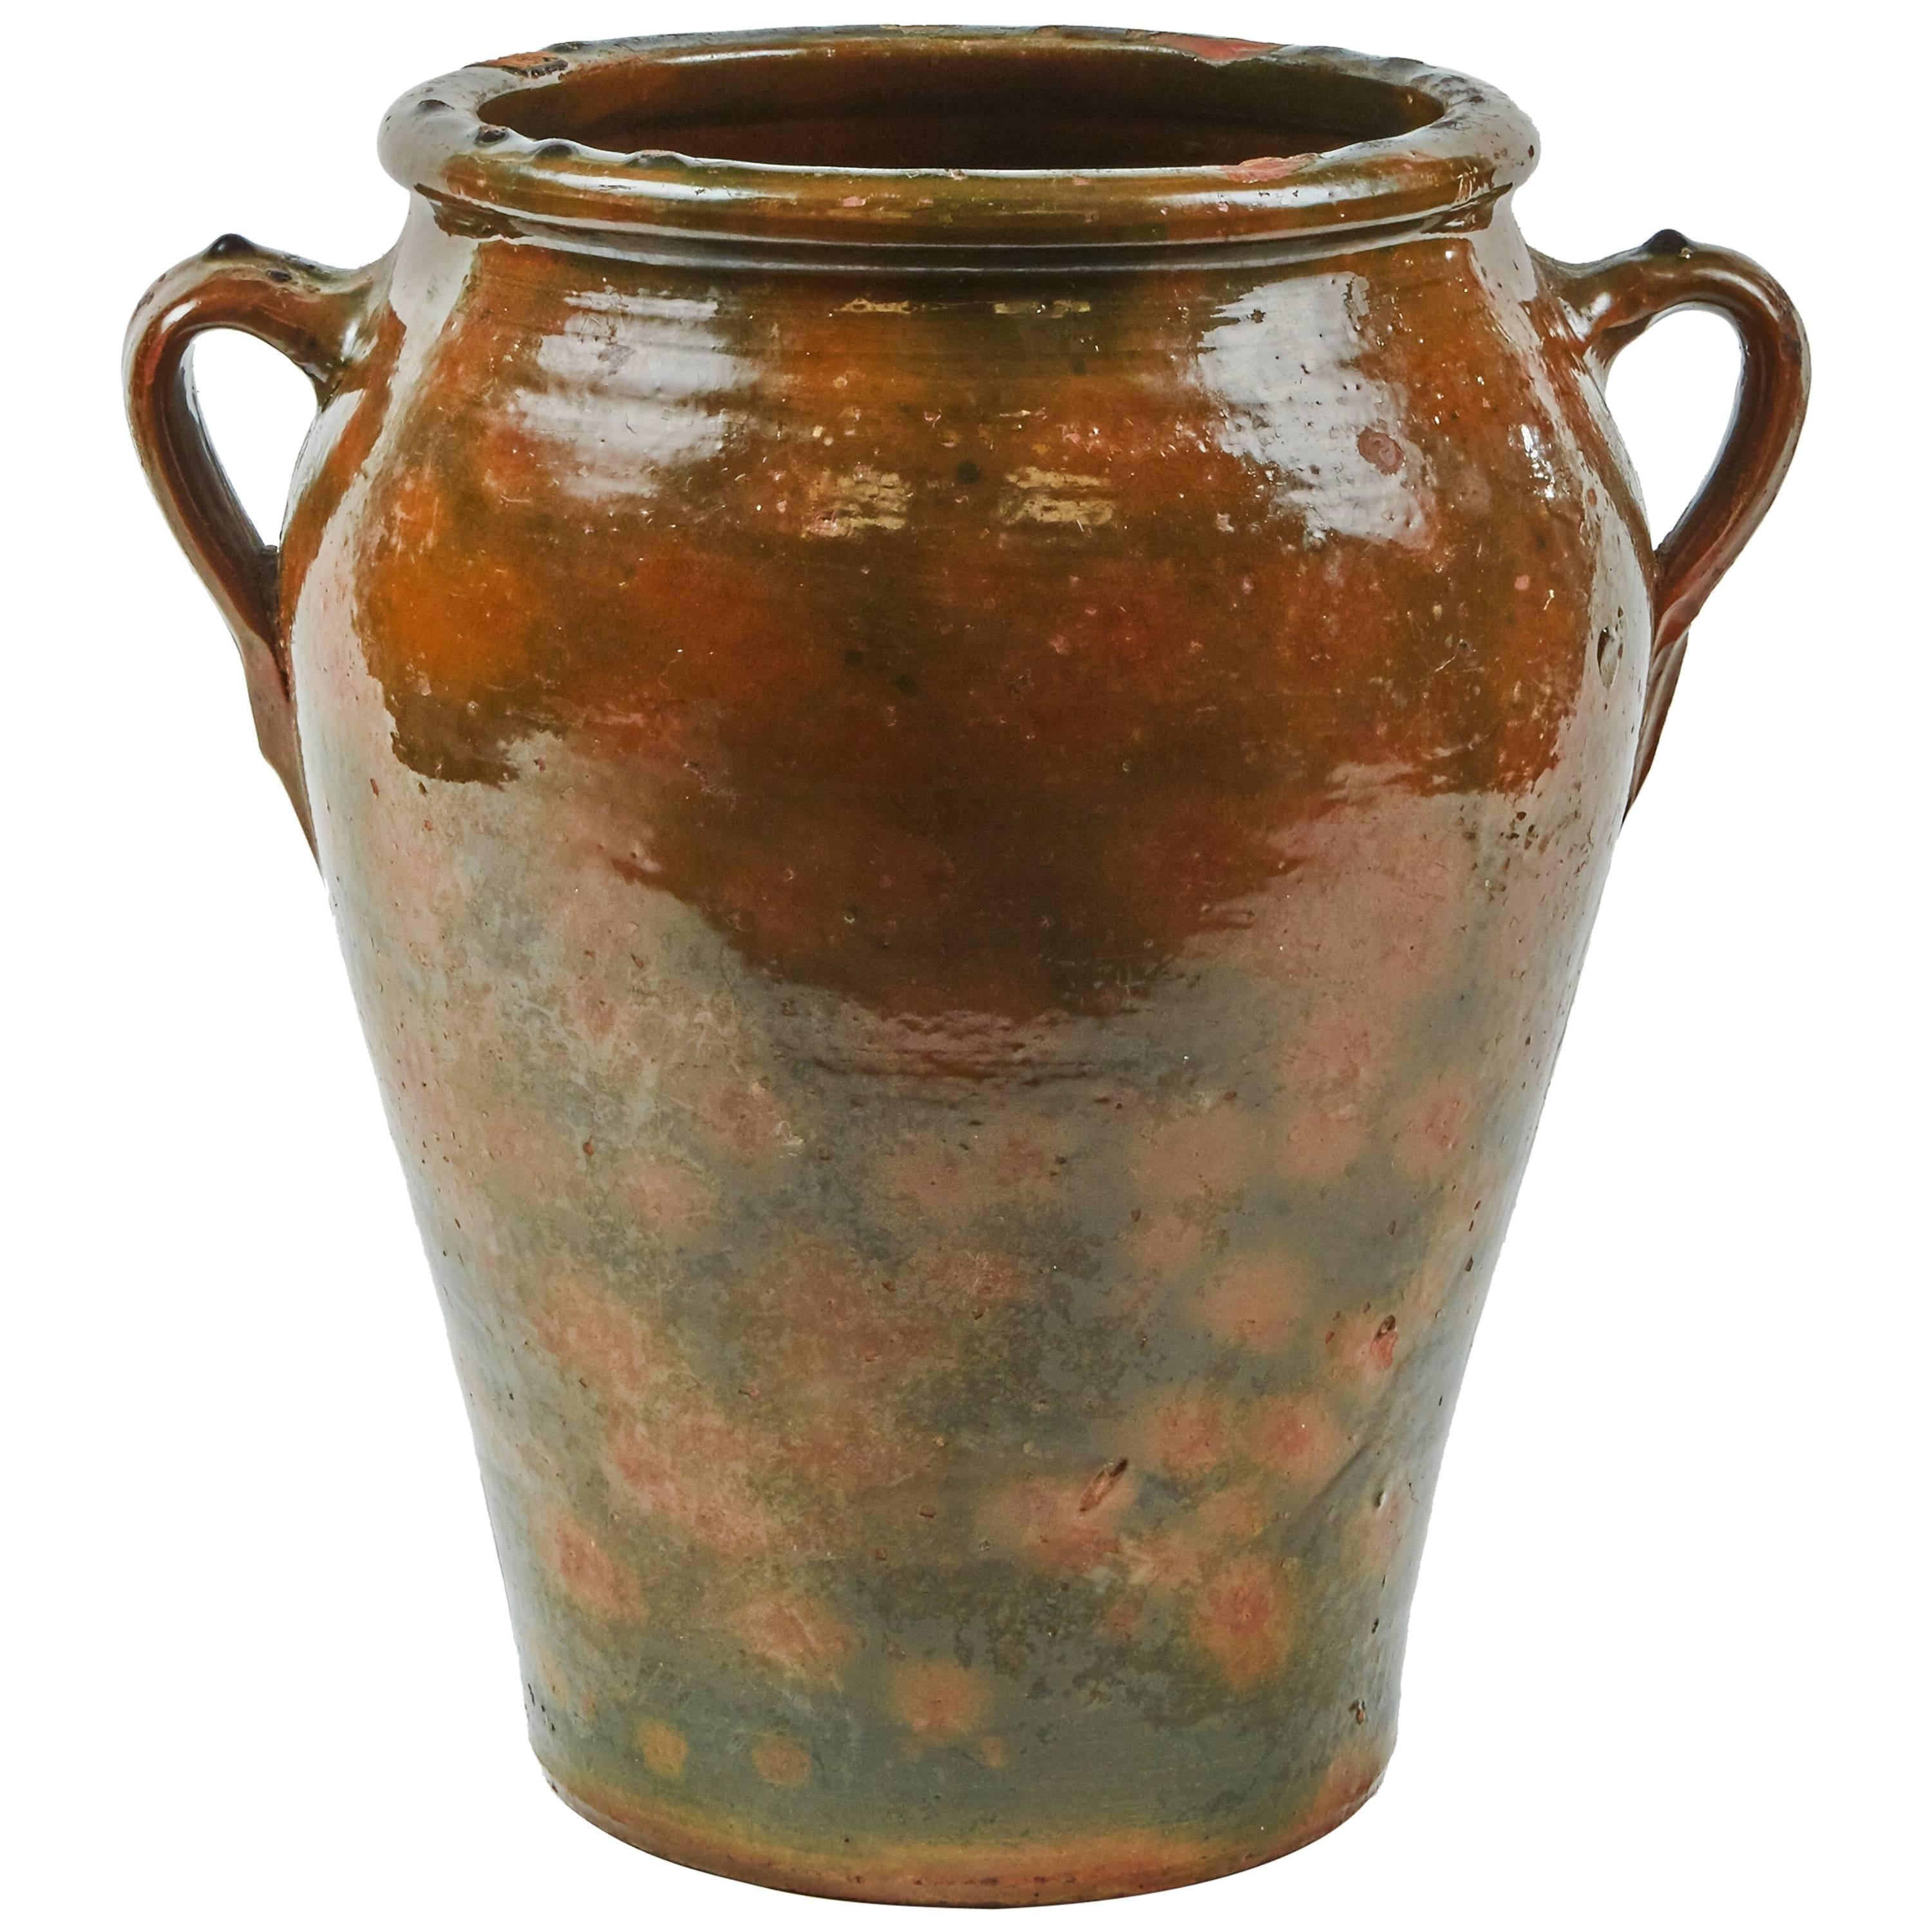 Olive Jar